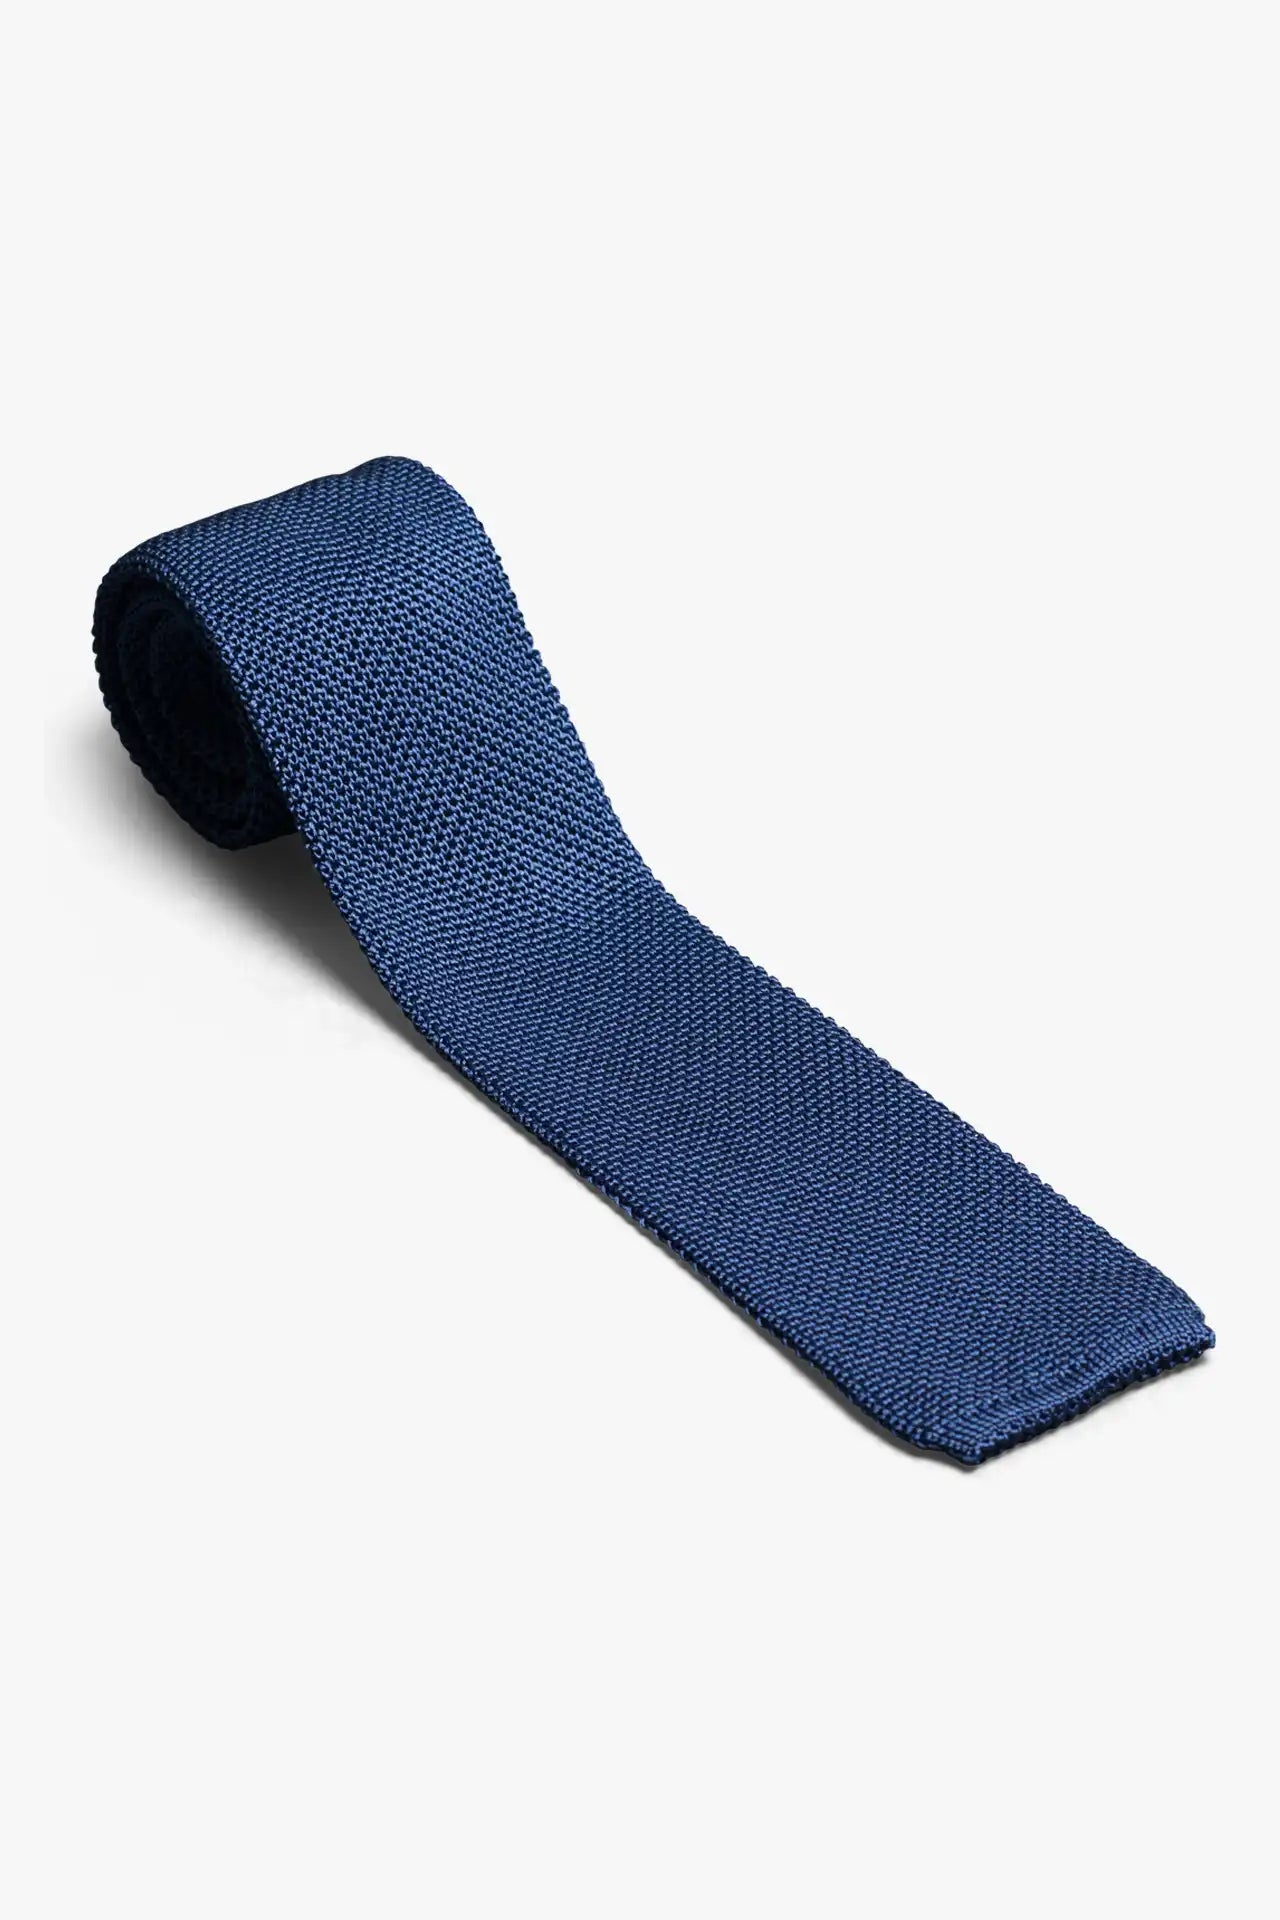 Silk knitted Tie - Ocean blue